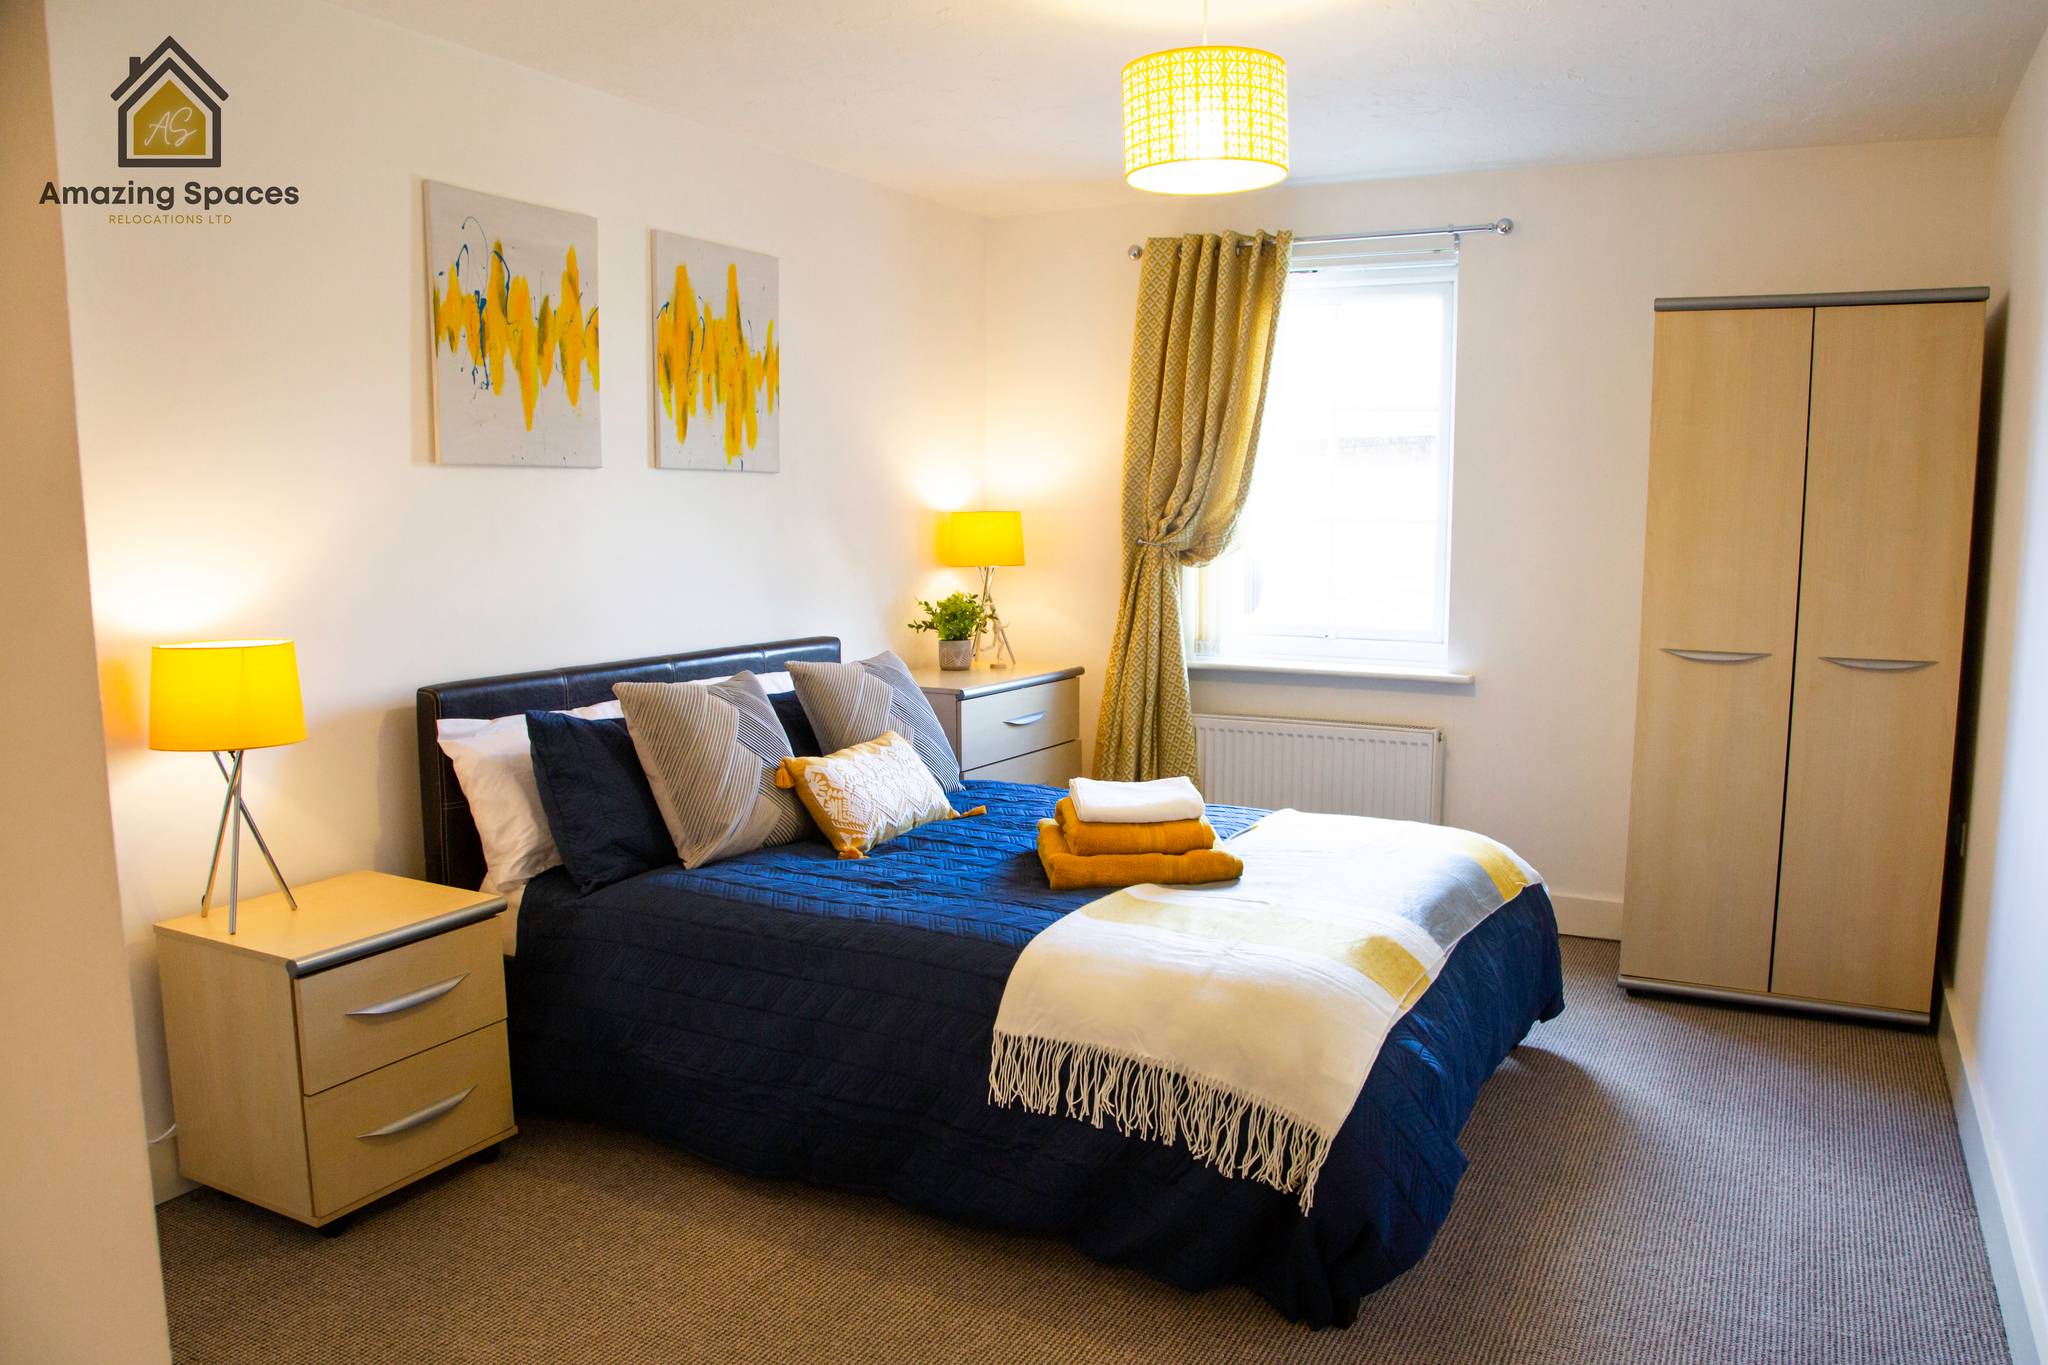 info@amazingspacesrelocations.com - Executive 2 bed apartment in Stockton Heath